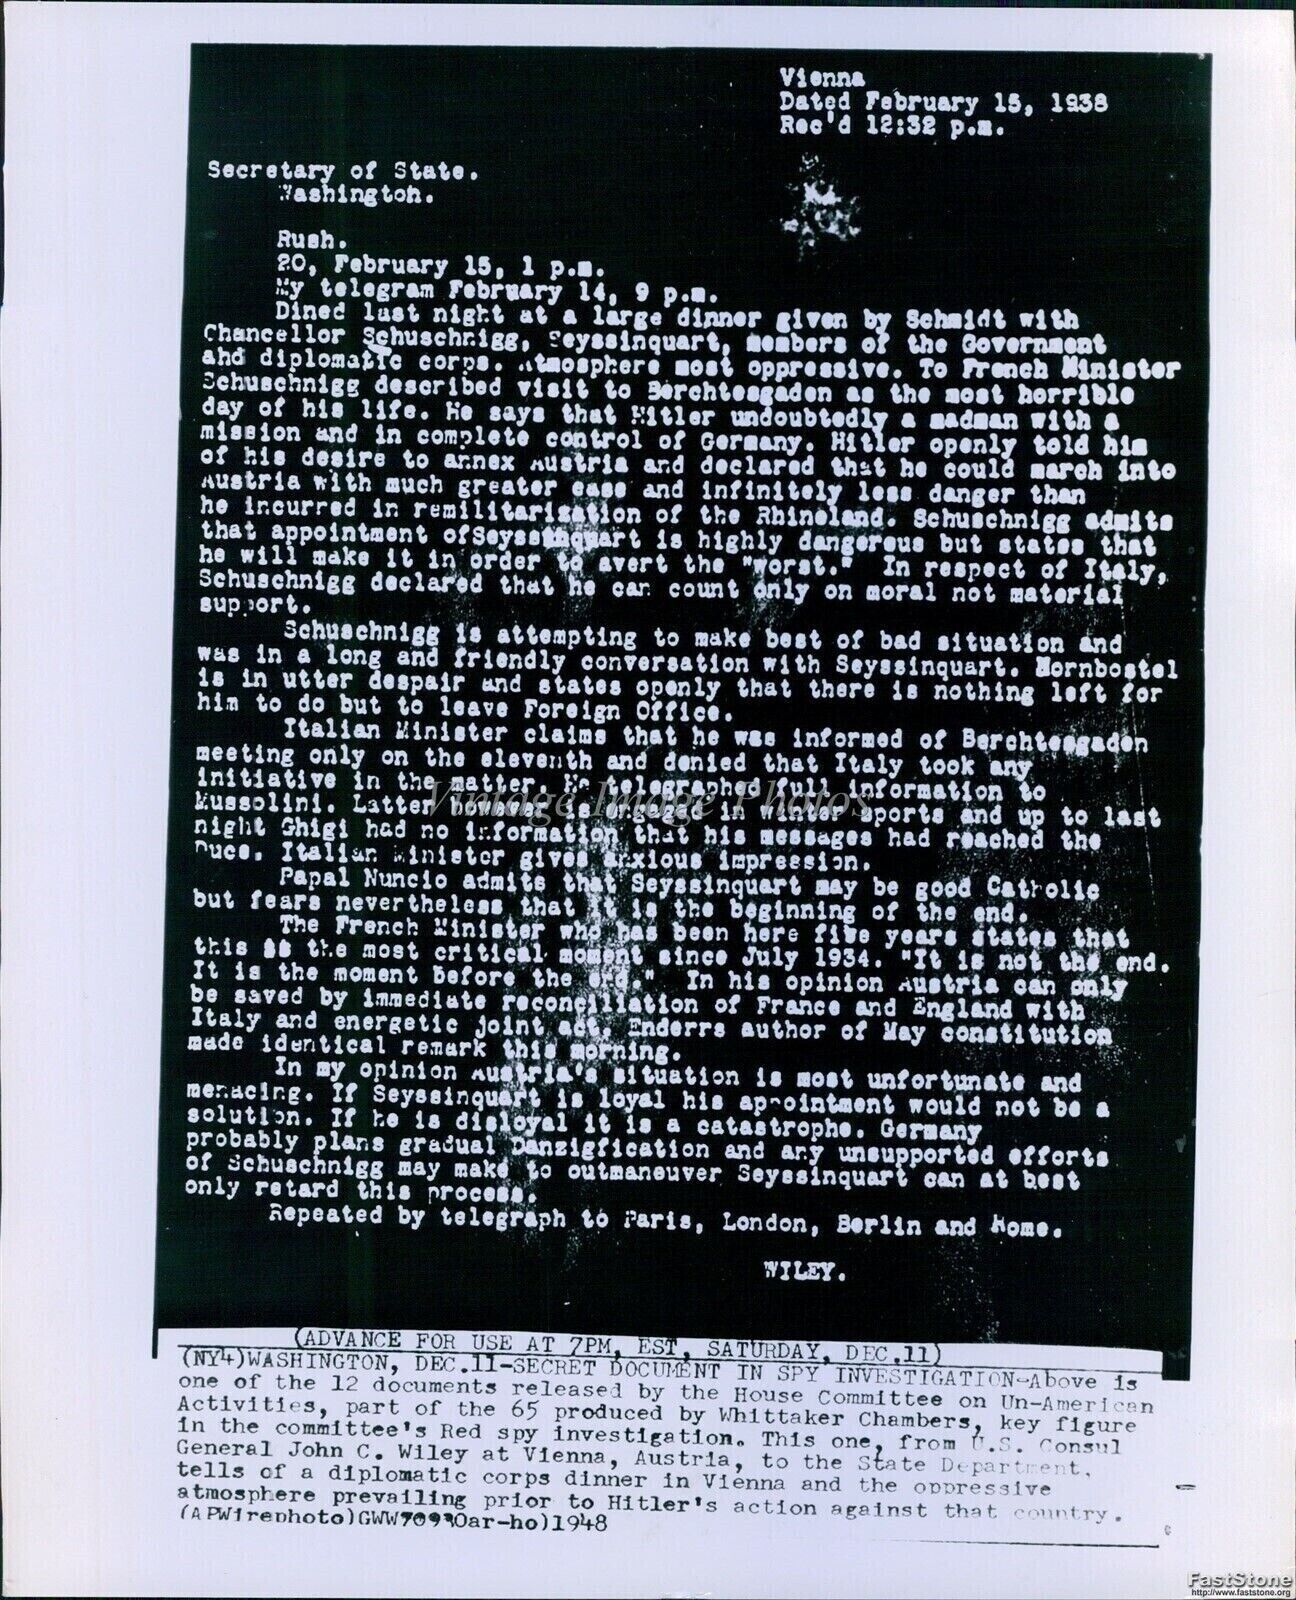 1948 Gen John Wiley Secret Document Released By Huac Politics Wirephoto 8X10